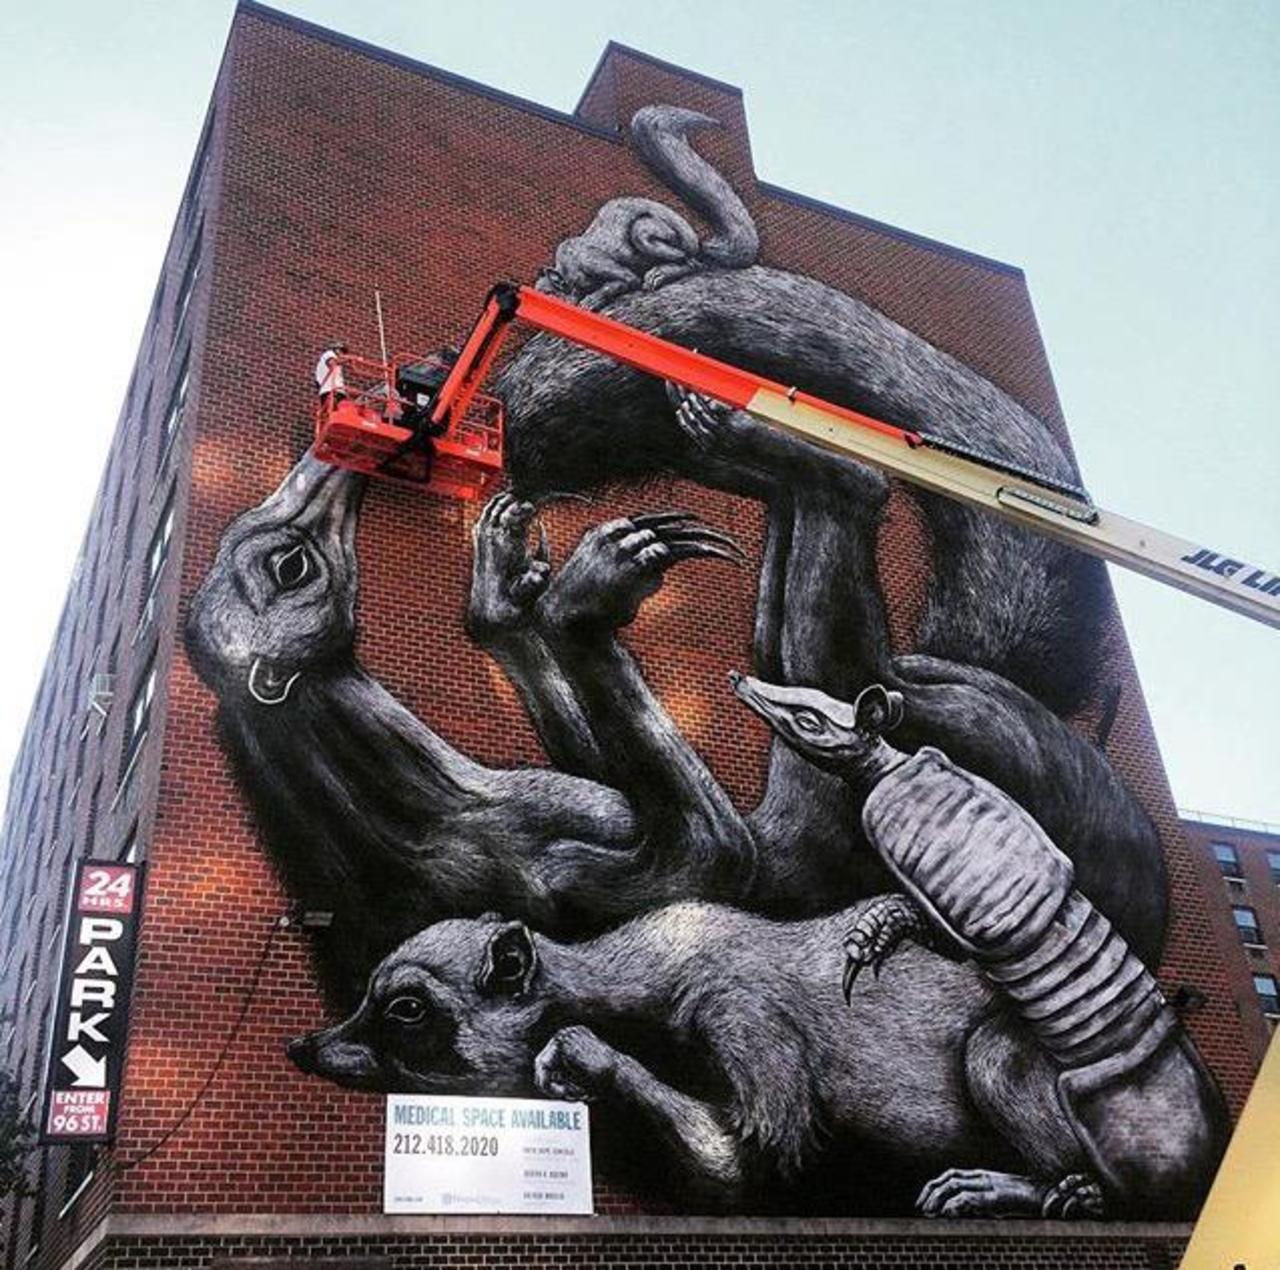 Street Art in progress by ROA in NYC

#art #graffiti #mural #streetart http://t.co/jaLJBGQyPi